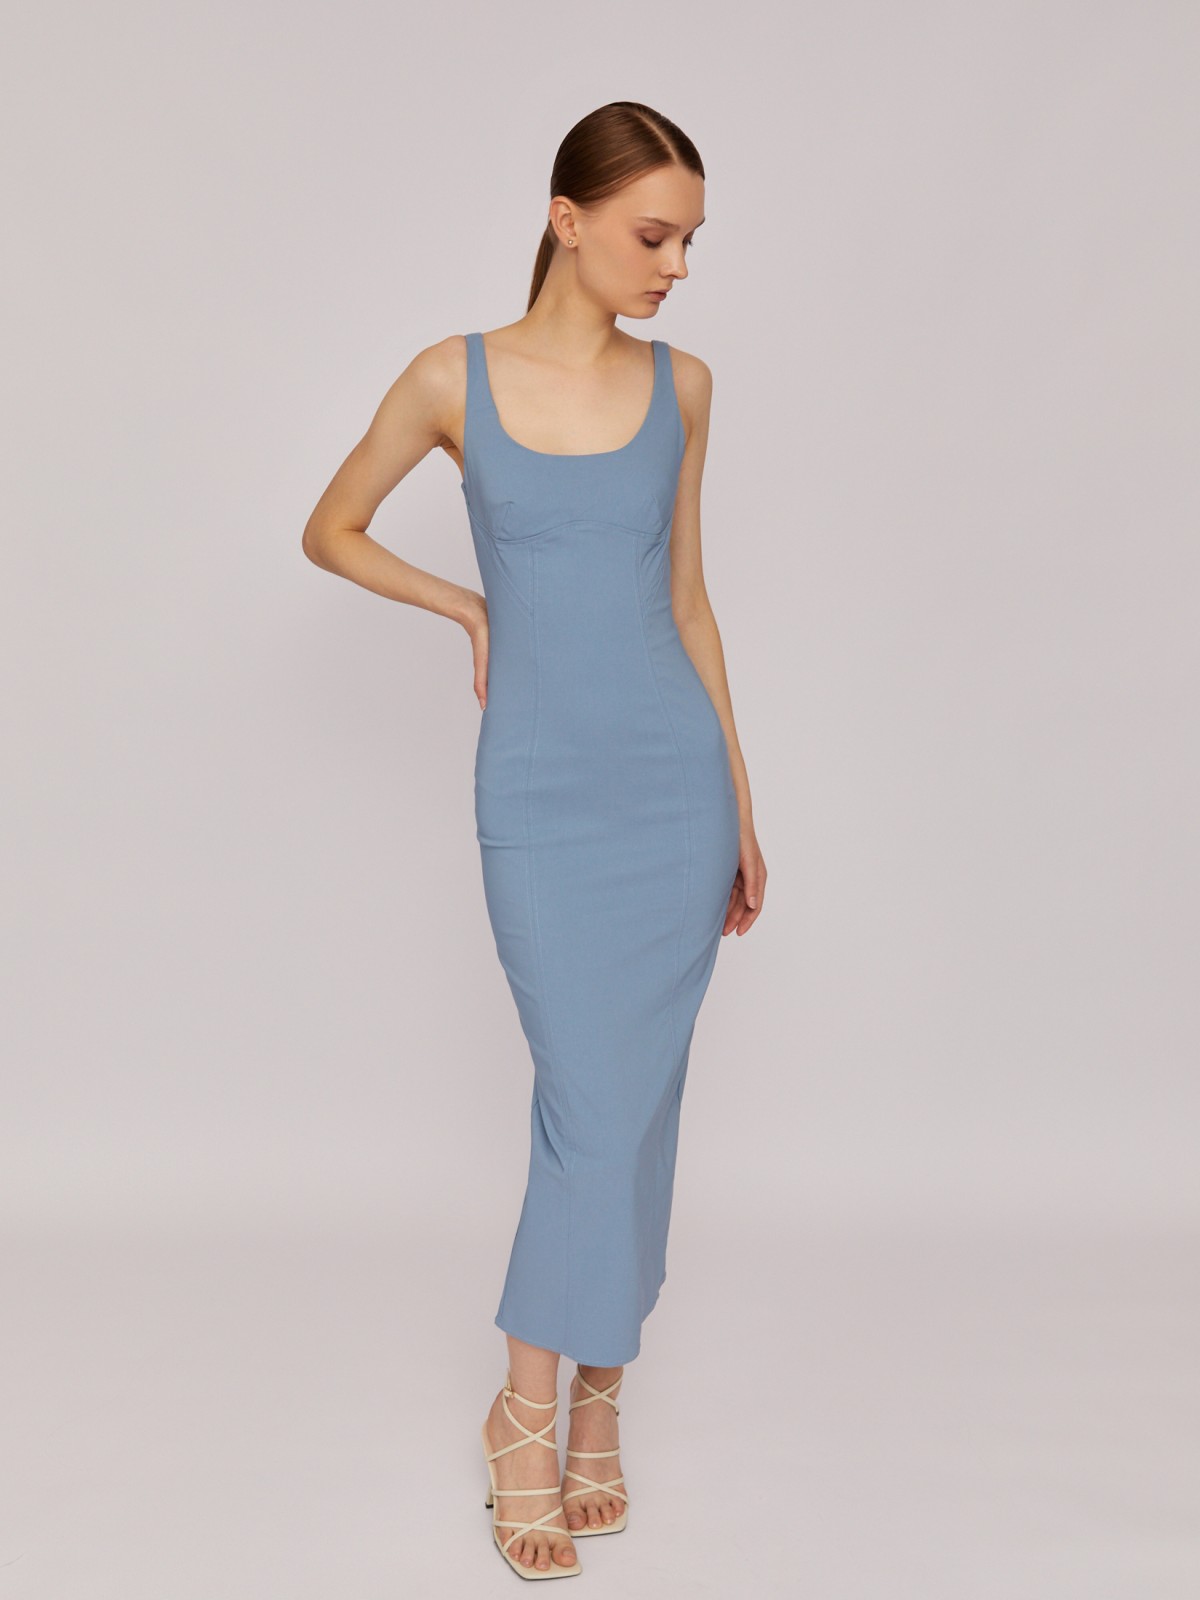 Платье-футляр без рукавов с имитацией корсета zolla 02425824Y091, цвет голубой, размер XS - фото 2